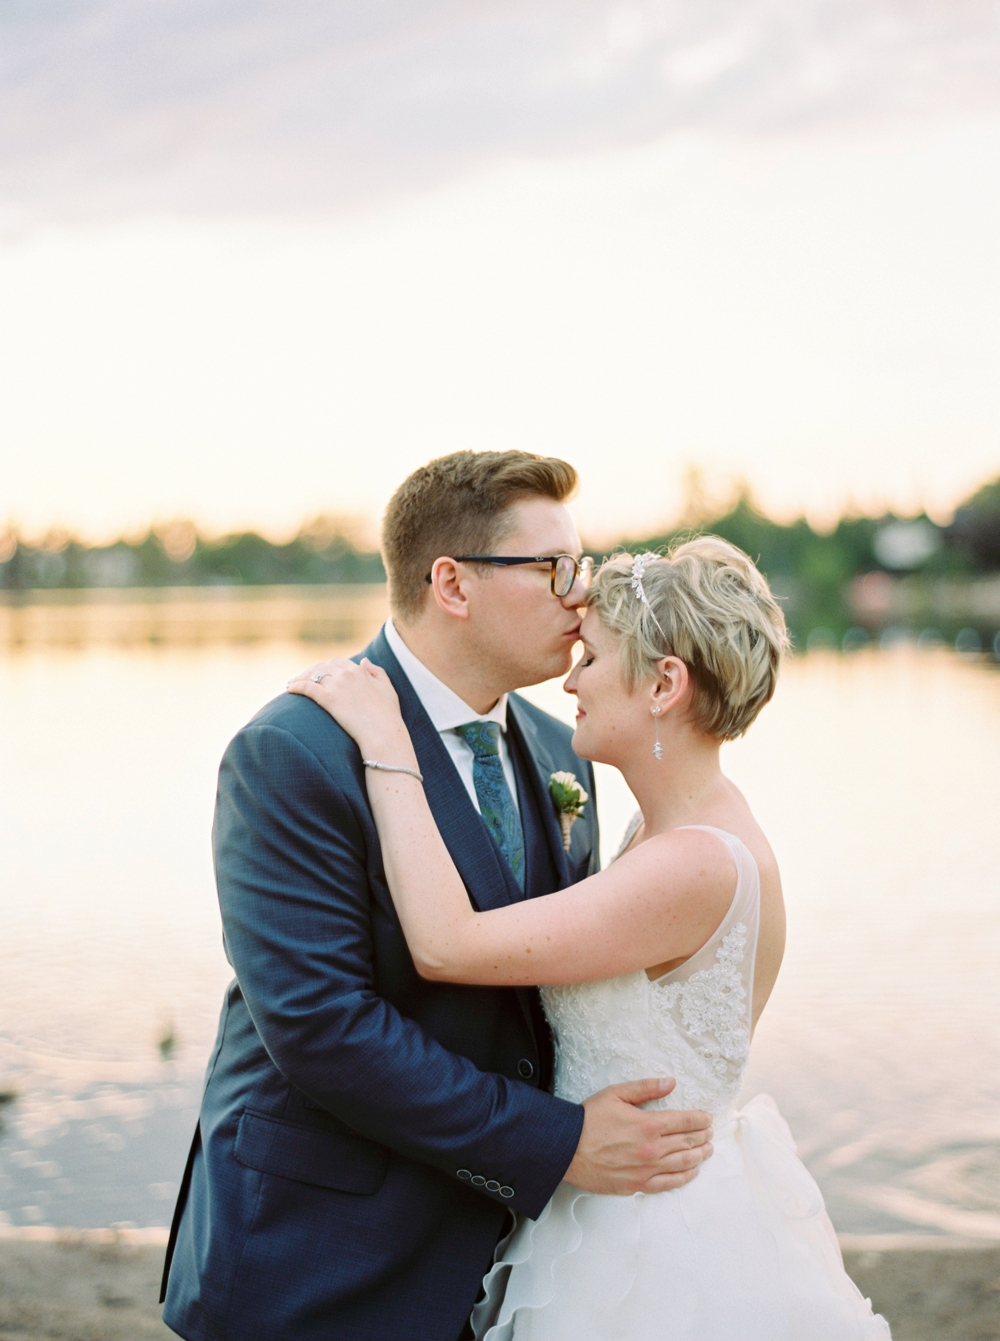 Calgary wedding photographers | The lake house wedding | The Lake House on Lake Bonavista Bride and groom photos with ducks | Justine Milton Photography